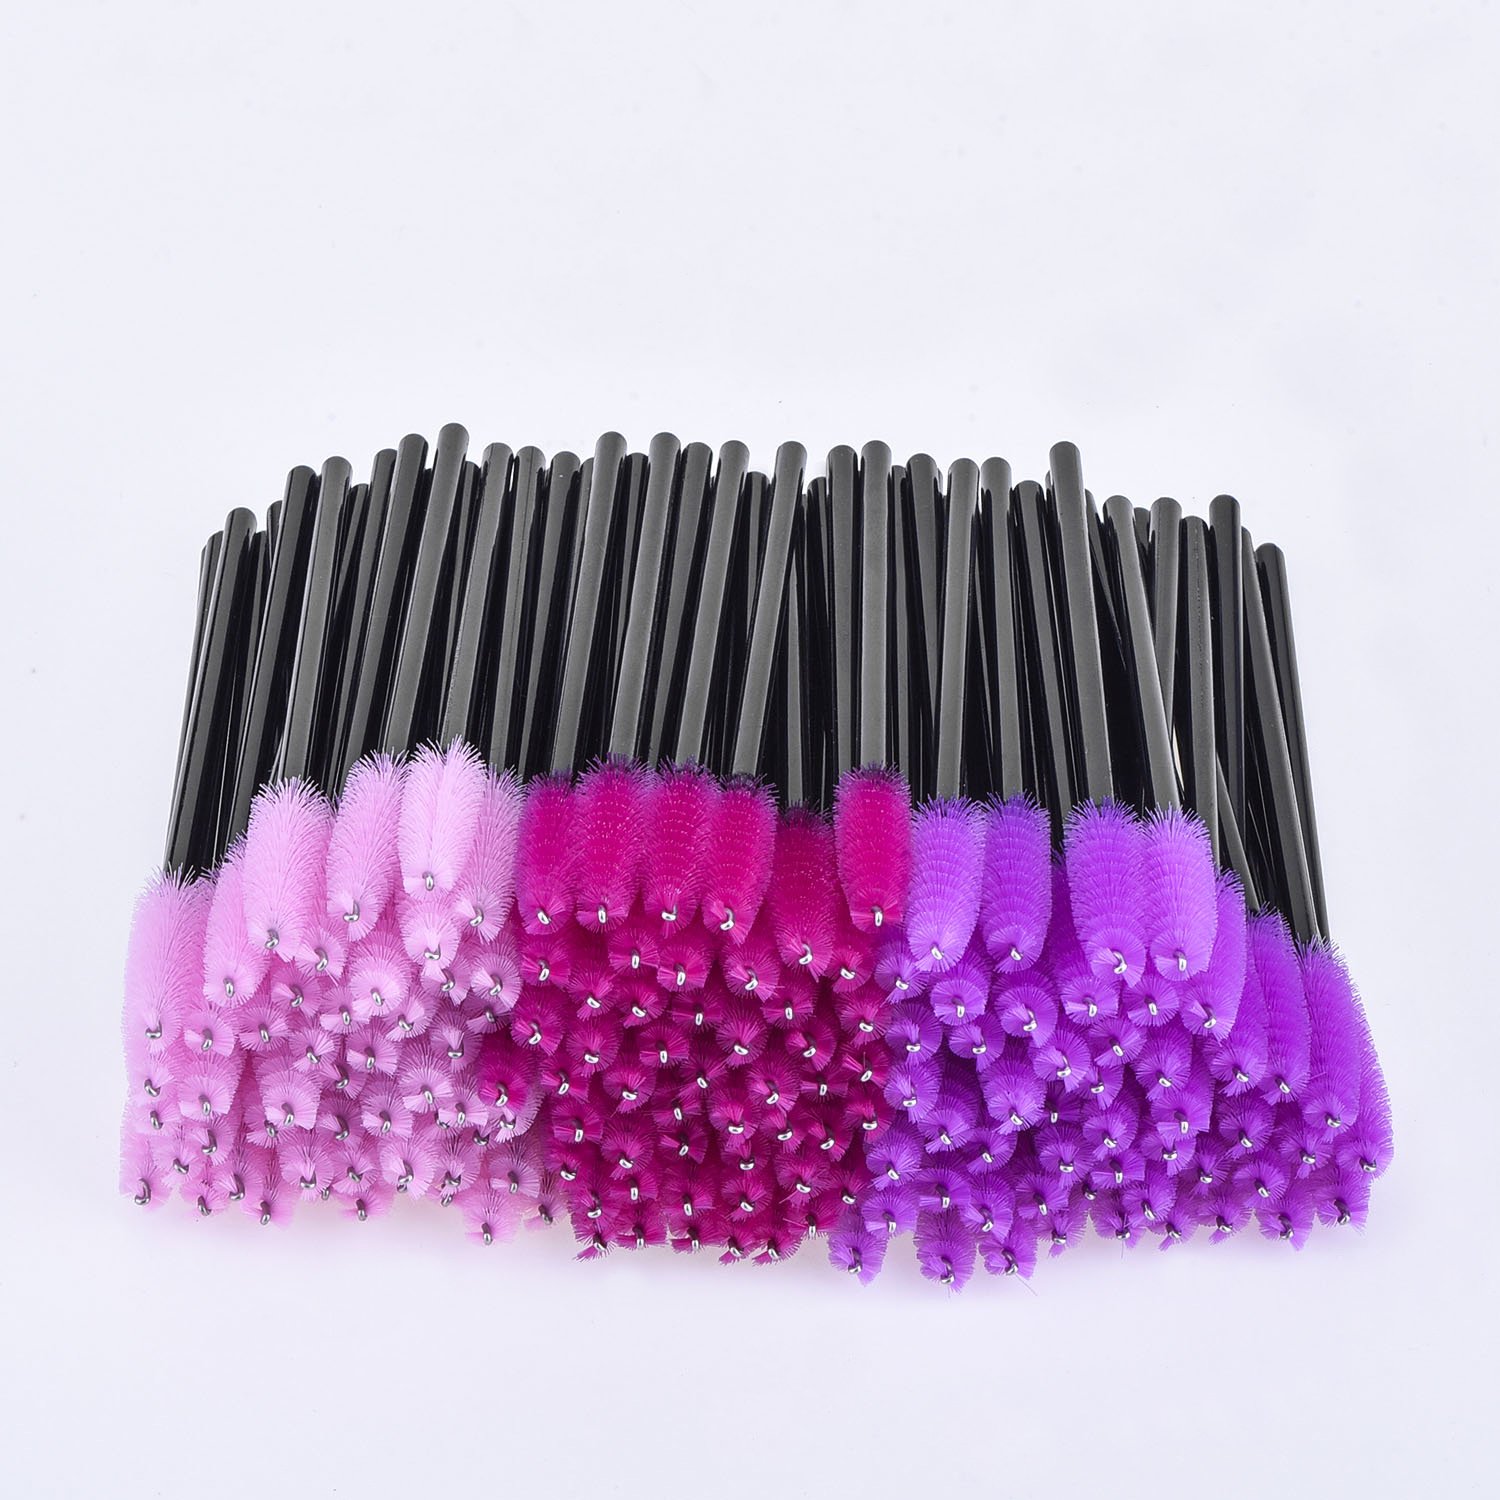 eBoot 300 Pieces Colored Disposable Mascara Wands Eyelash Eye Lash Brush Makeup Applicators Kit (Black Handle, Multicolor Head)